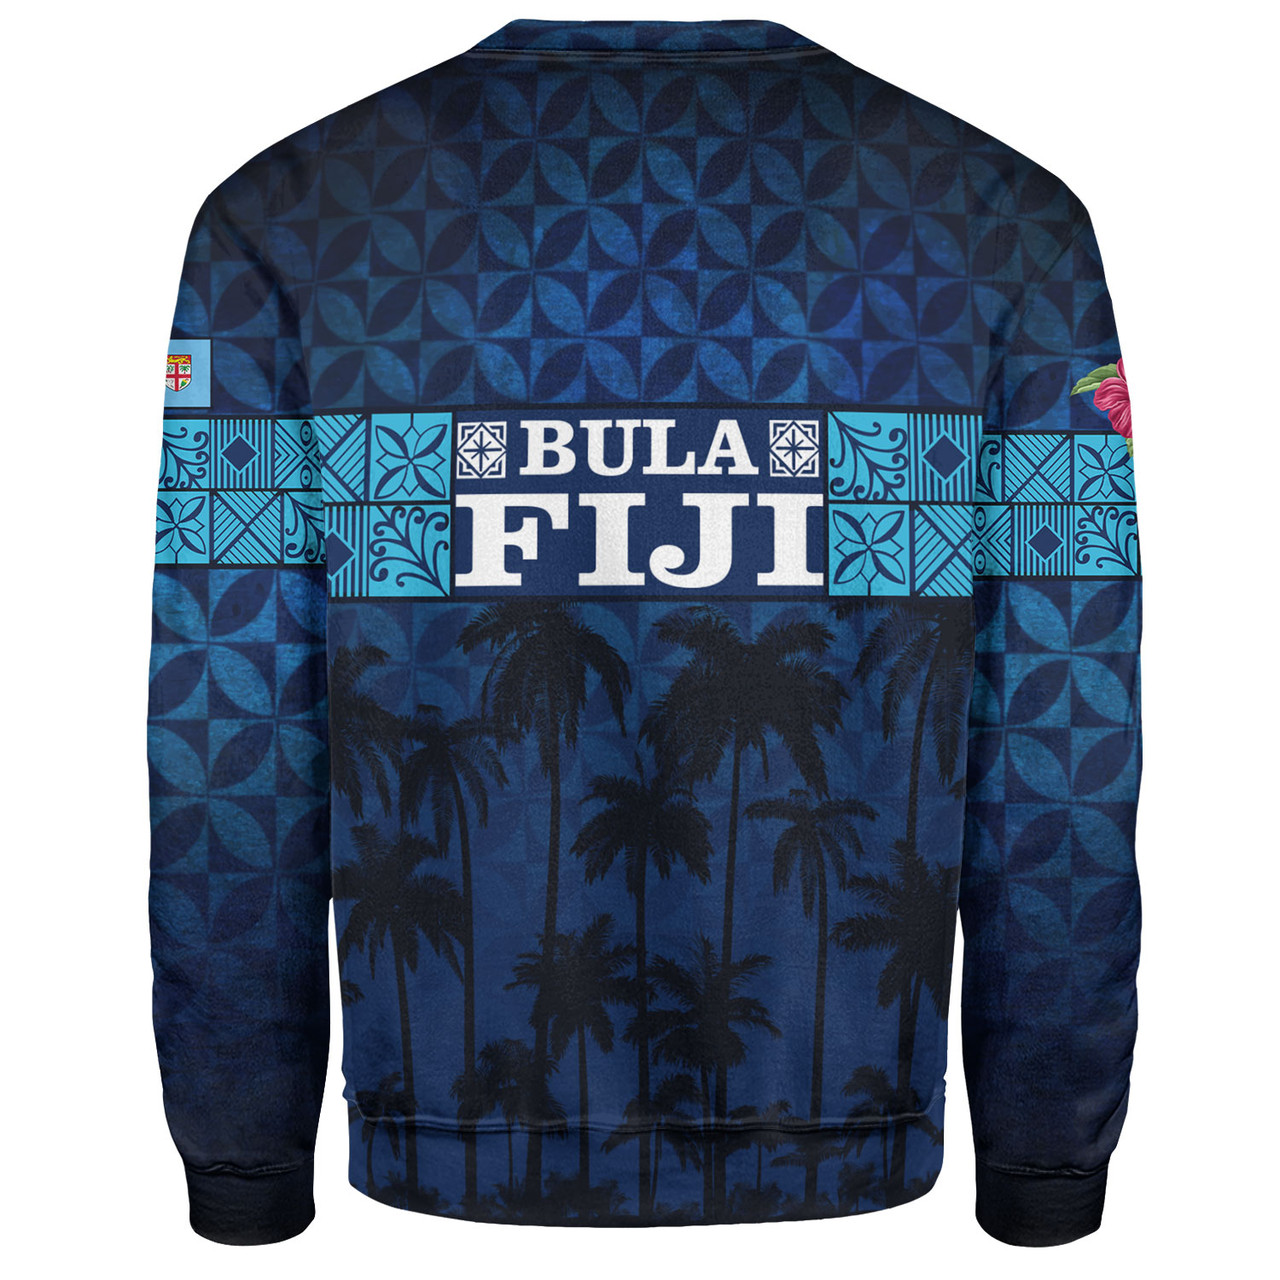 Fiji Sweatshirt - Custom Bula Fiji Masi Palm Tree Design